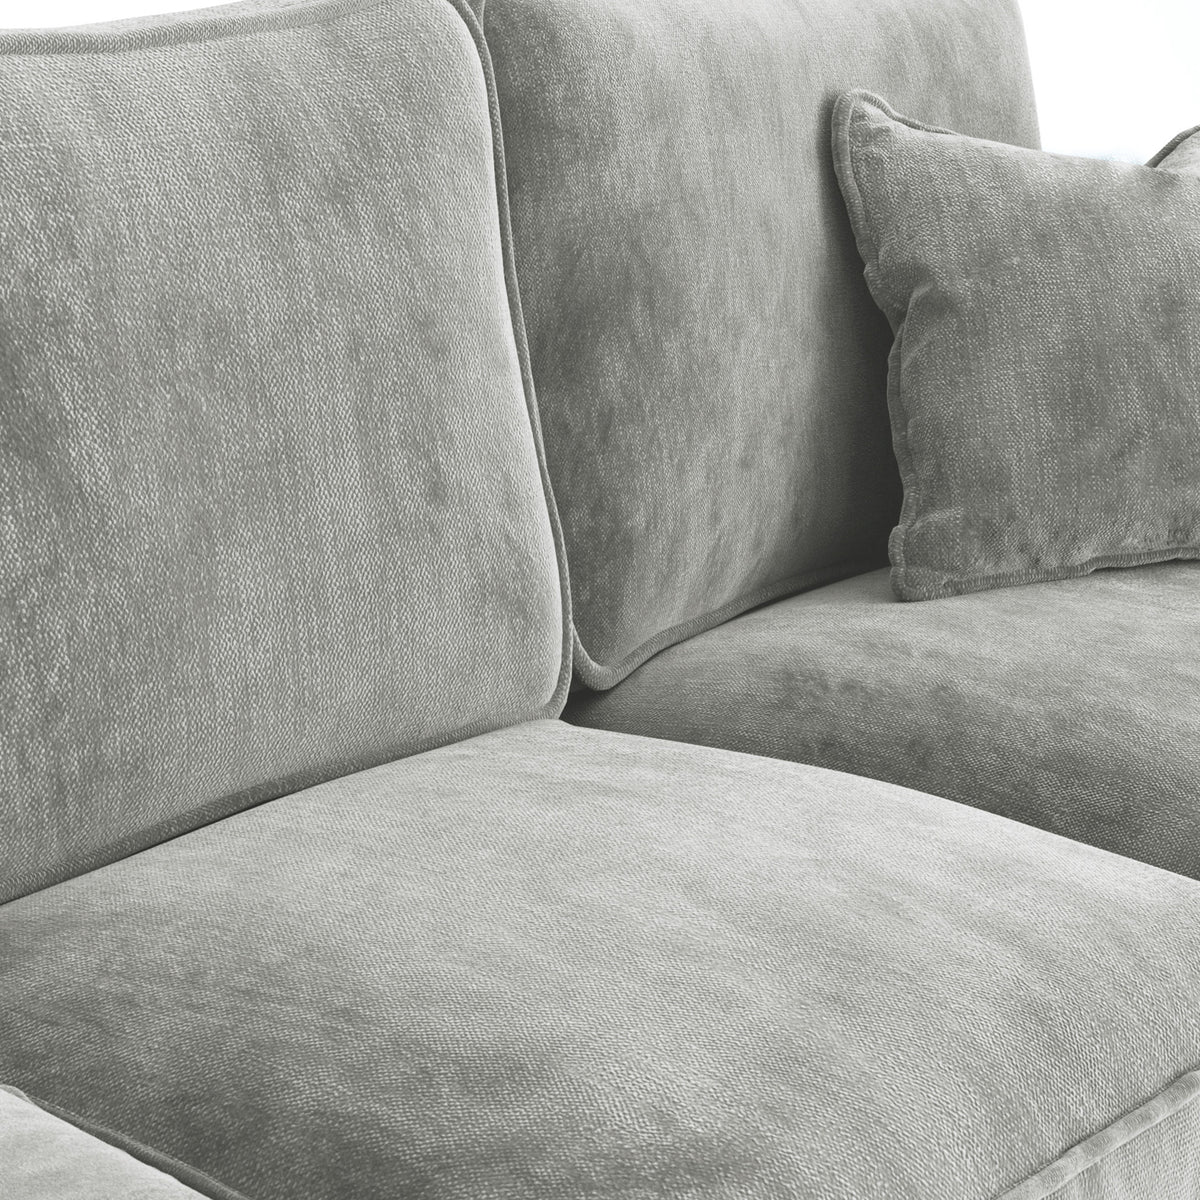 Arthur Ice Grey 3 Seater Sofa from Roseland Furniture